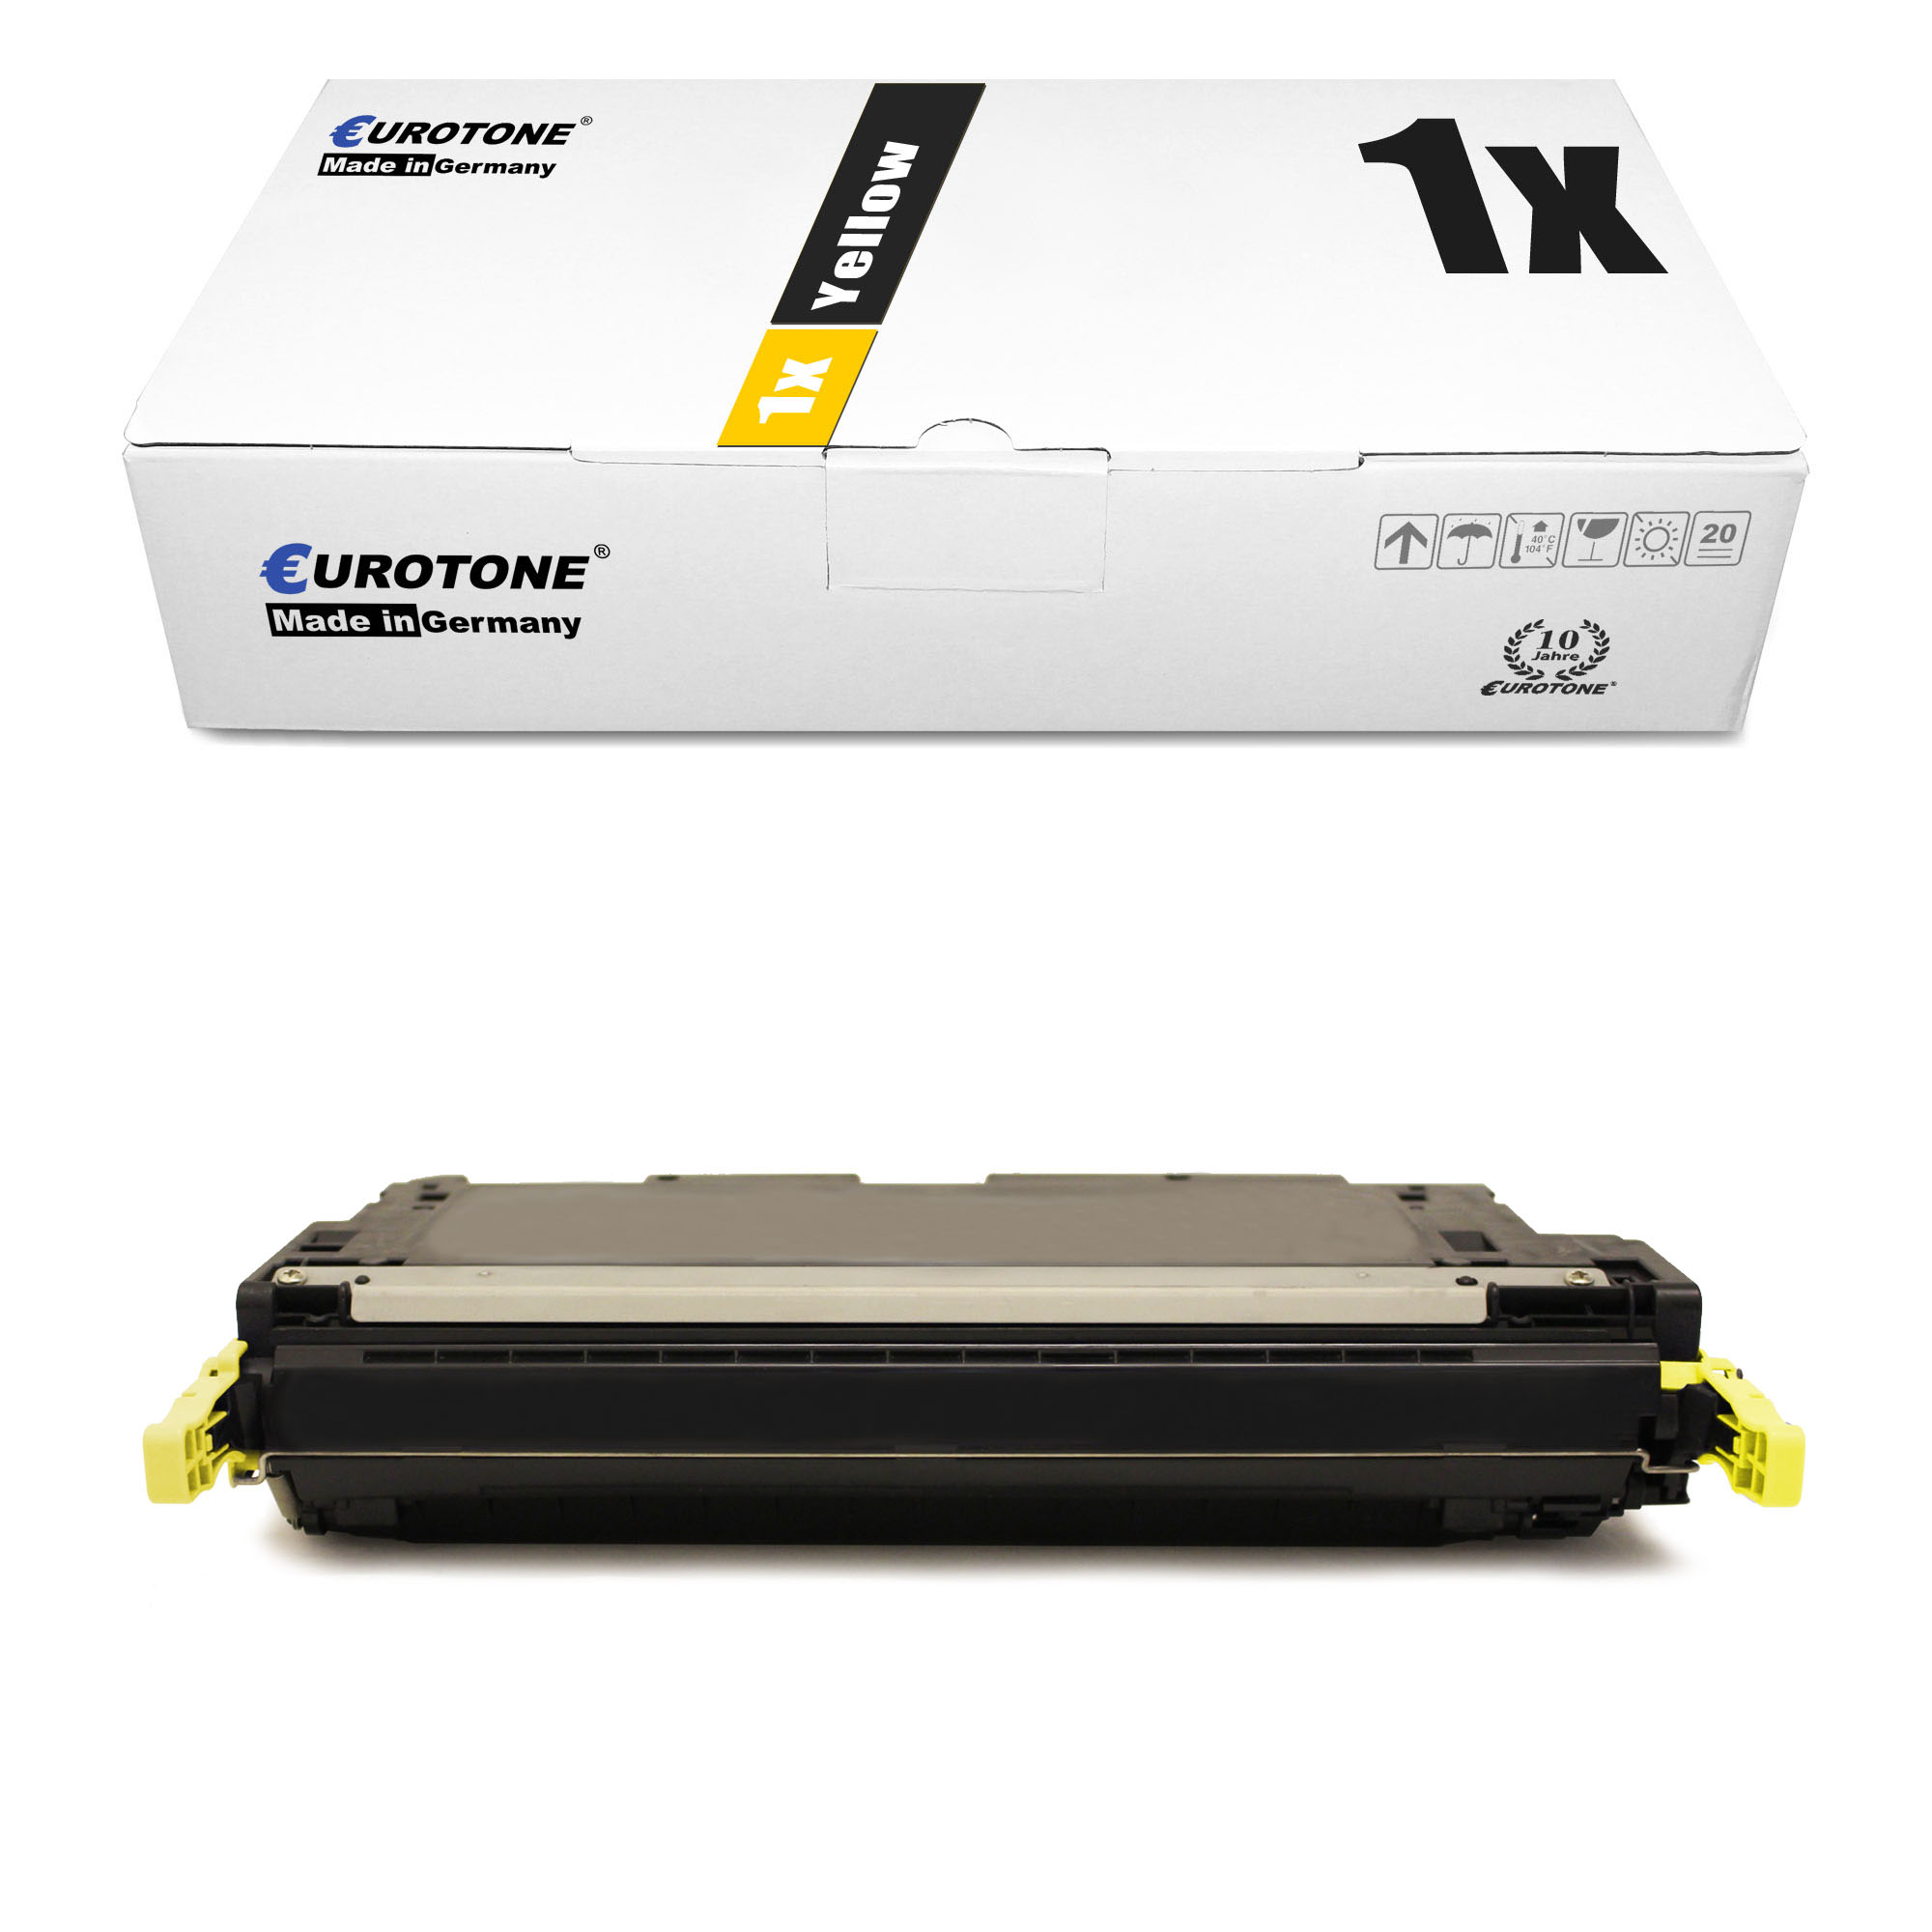 EUROTONE CP4005 1xY CB402A Yellow 642A) Toner (HP / Cartridge